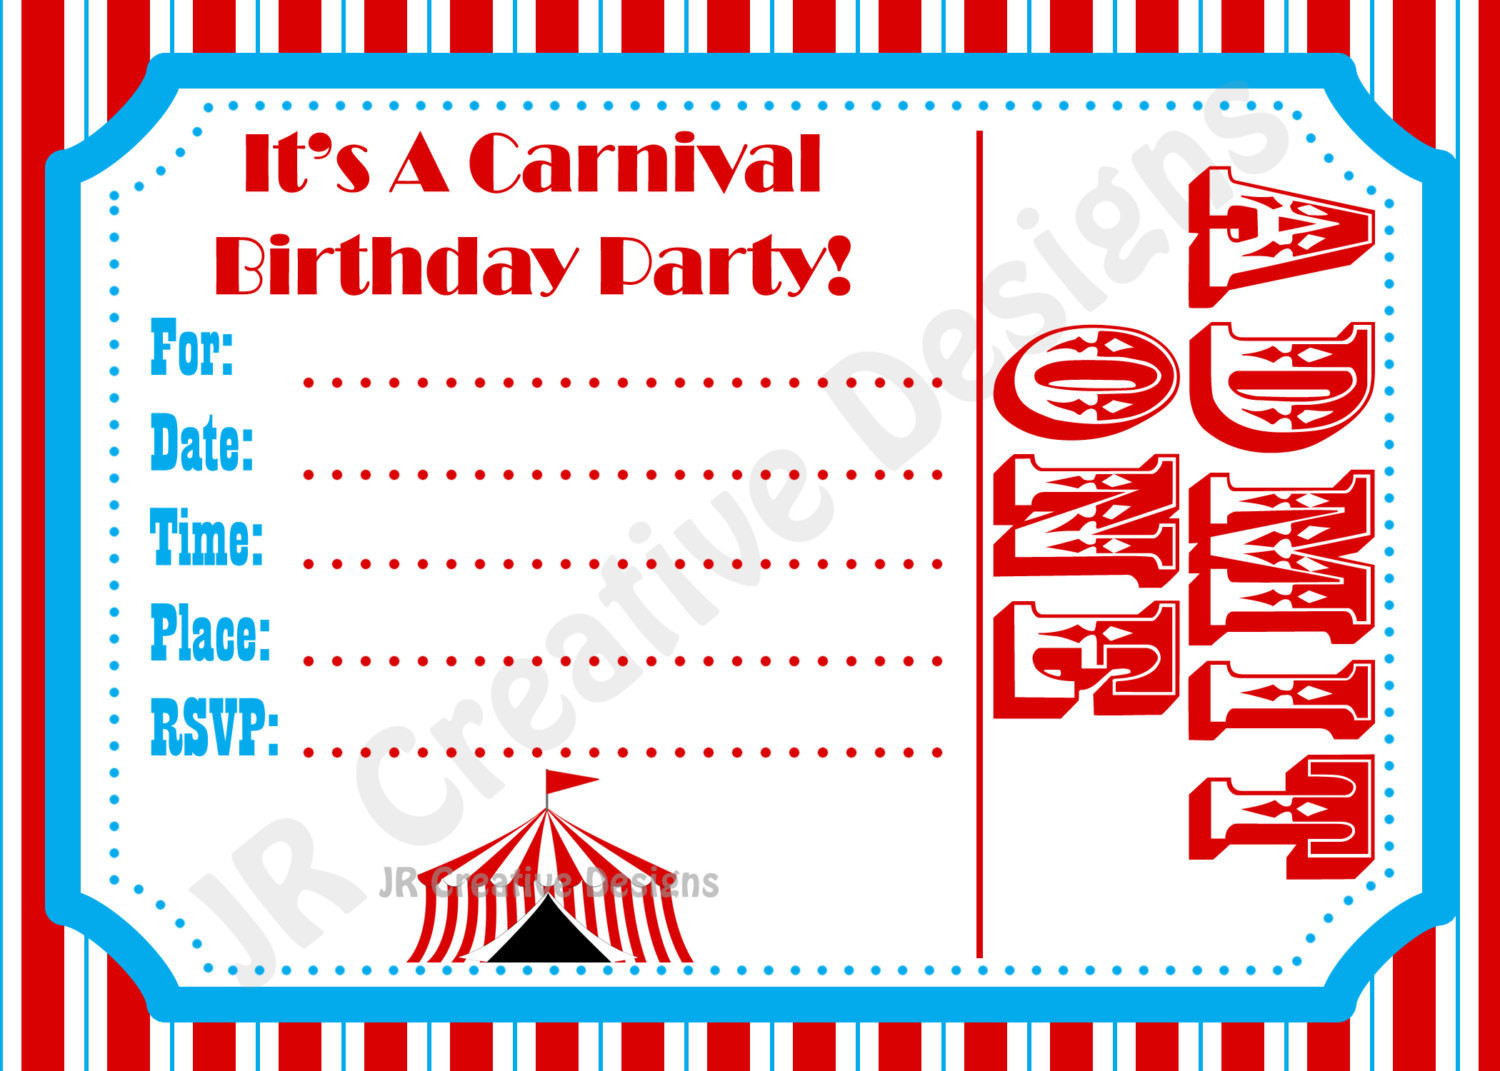 Free Printable Carnival Birthday Invitations
 Carnival Invite Circus Invite Circus by JRCreativeDesigns